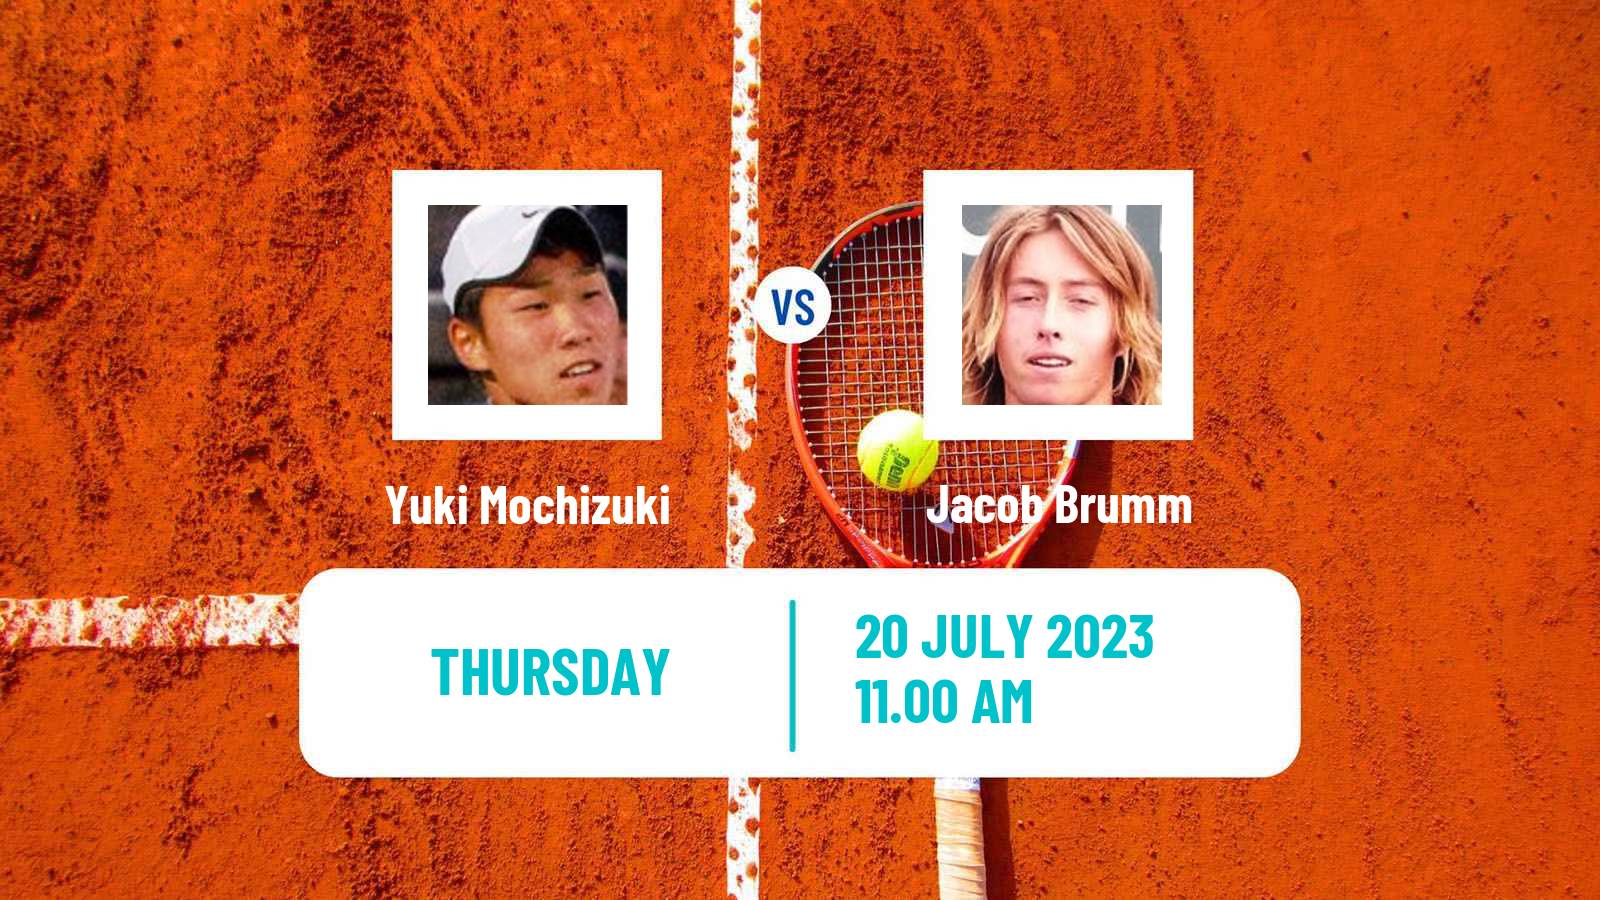 Tennis ITF M25 Champaign Il Men Yuki Mochizuki - Jacob Brumm